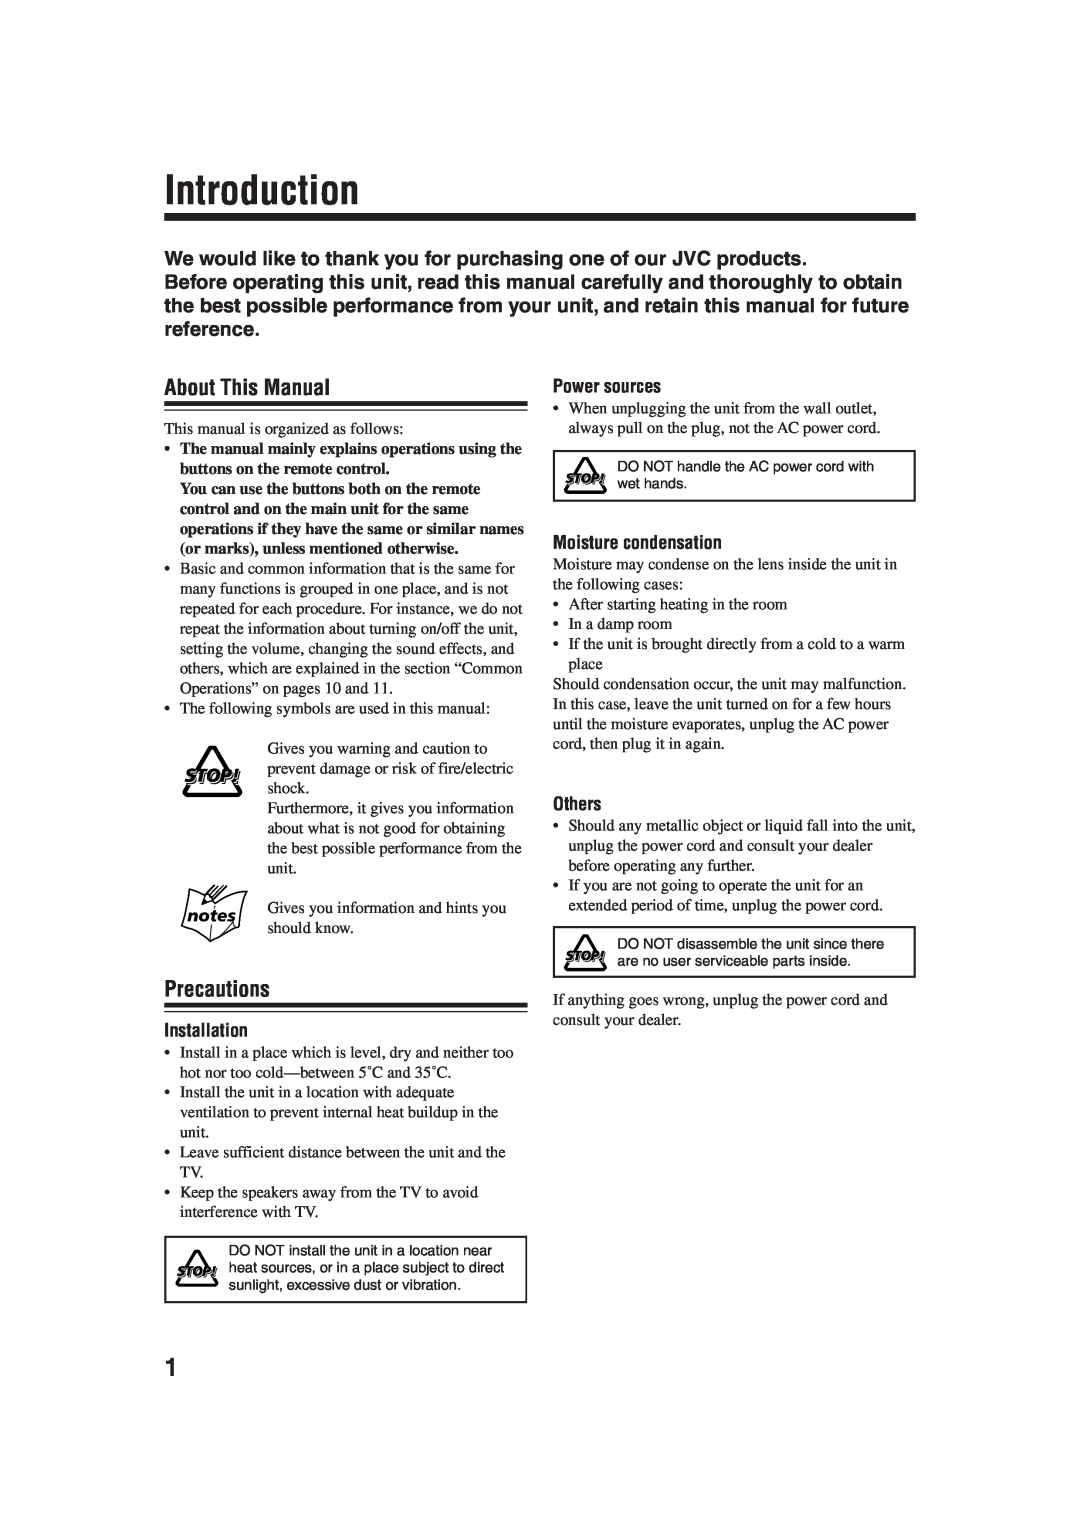 JVC UX-H30, CA-UXH33, SP-UXH33 manual Introduction, About This Manual, Precautions 